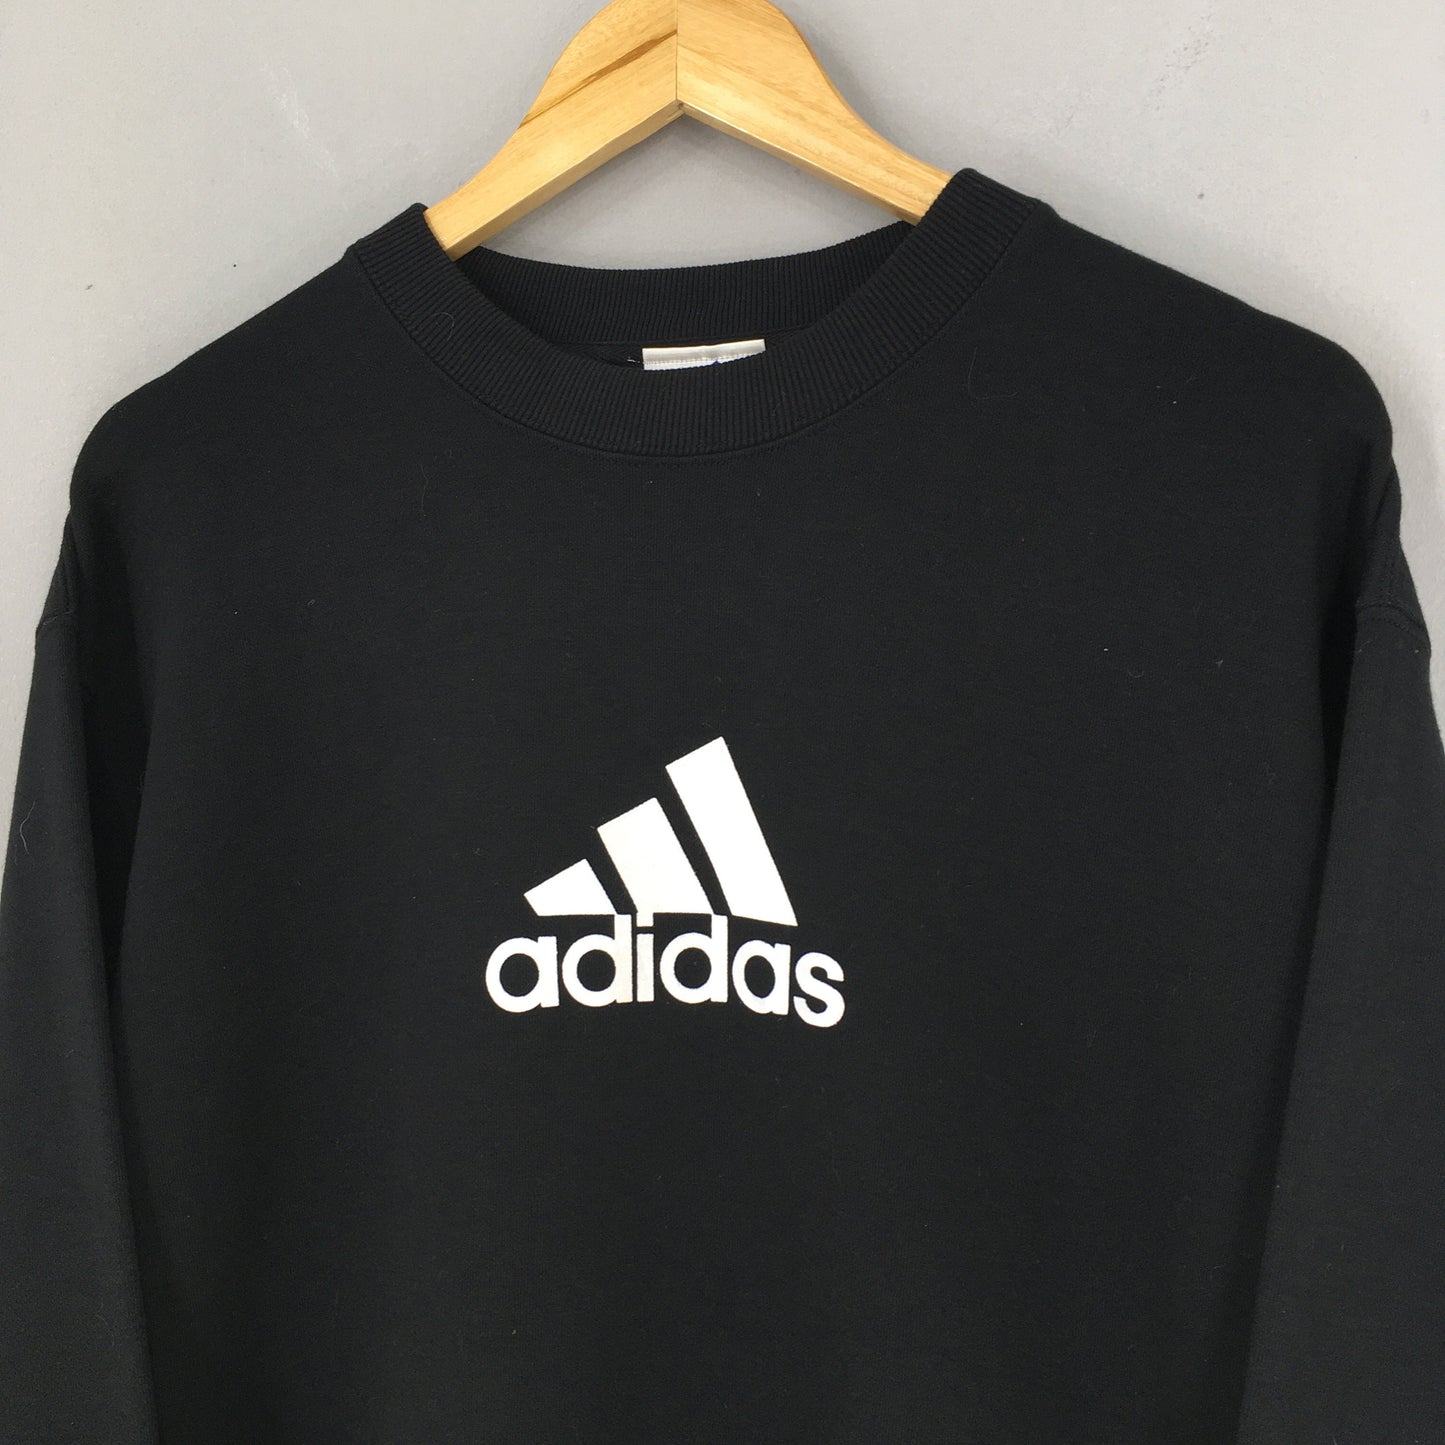 Adidas Equipment Black Sweater Large